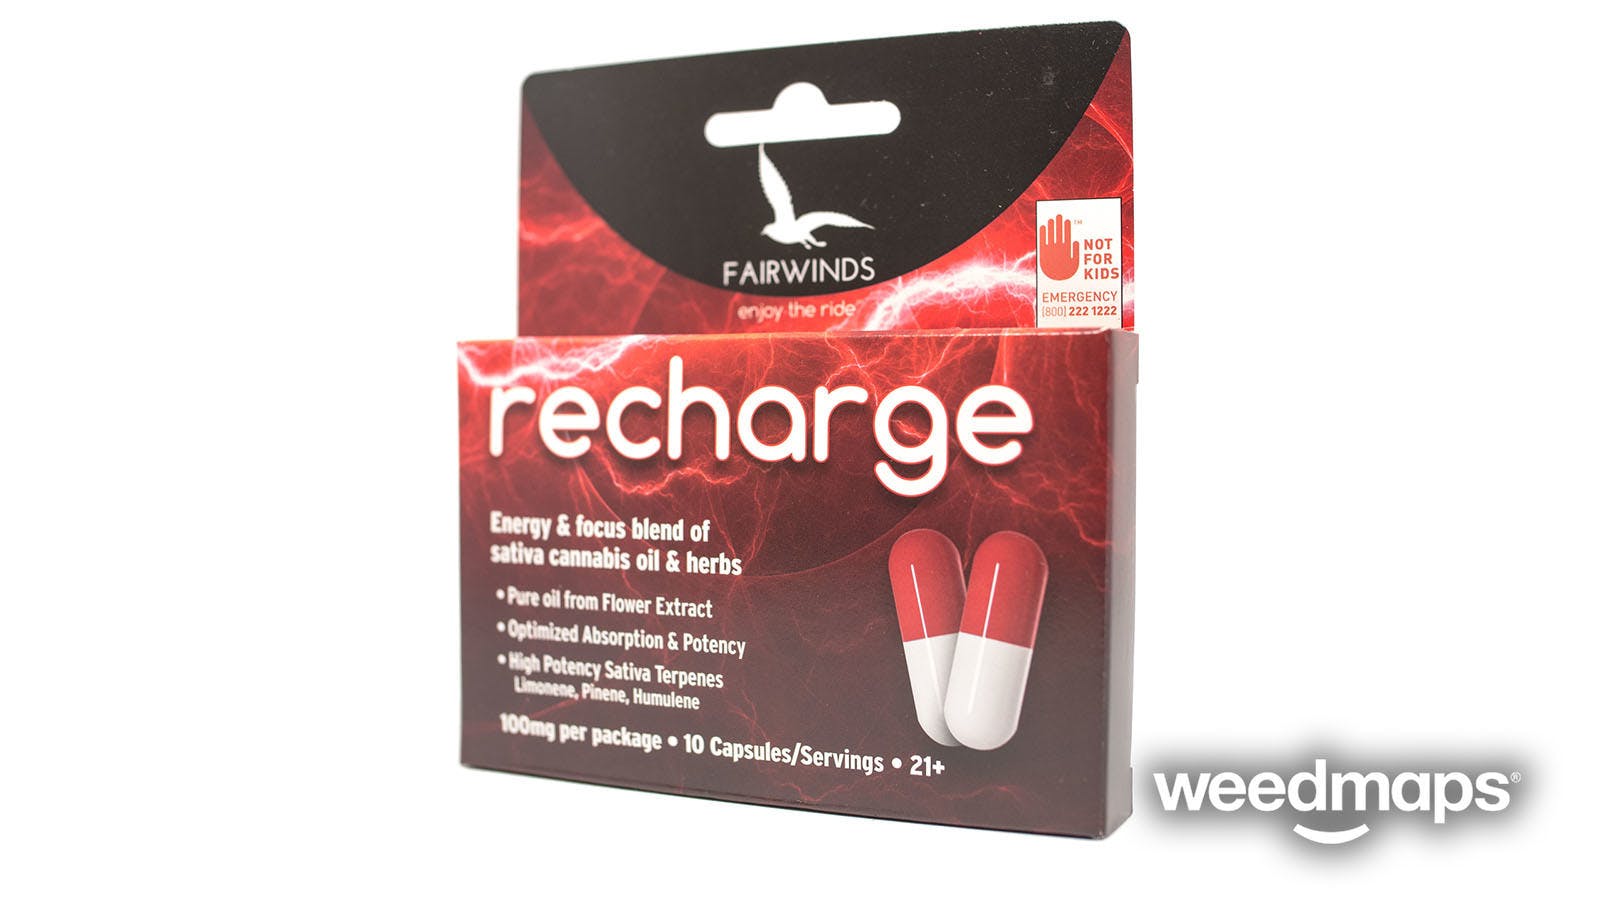 edible-fairwinds-capsule-recharge-sativa